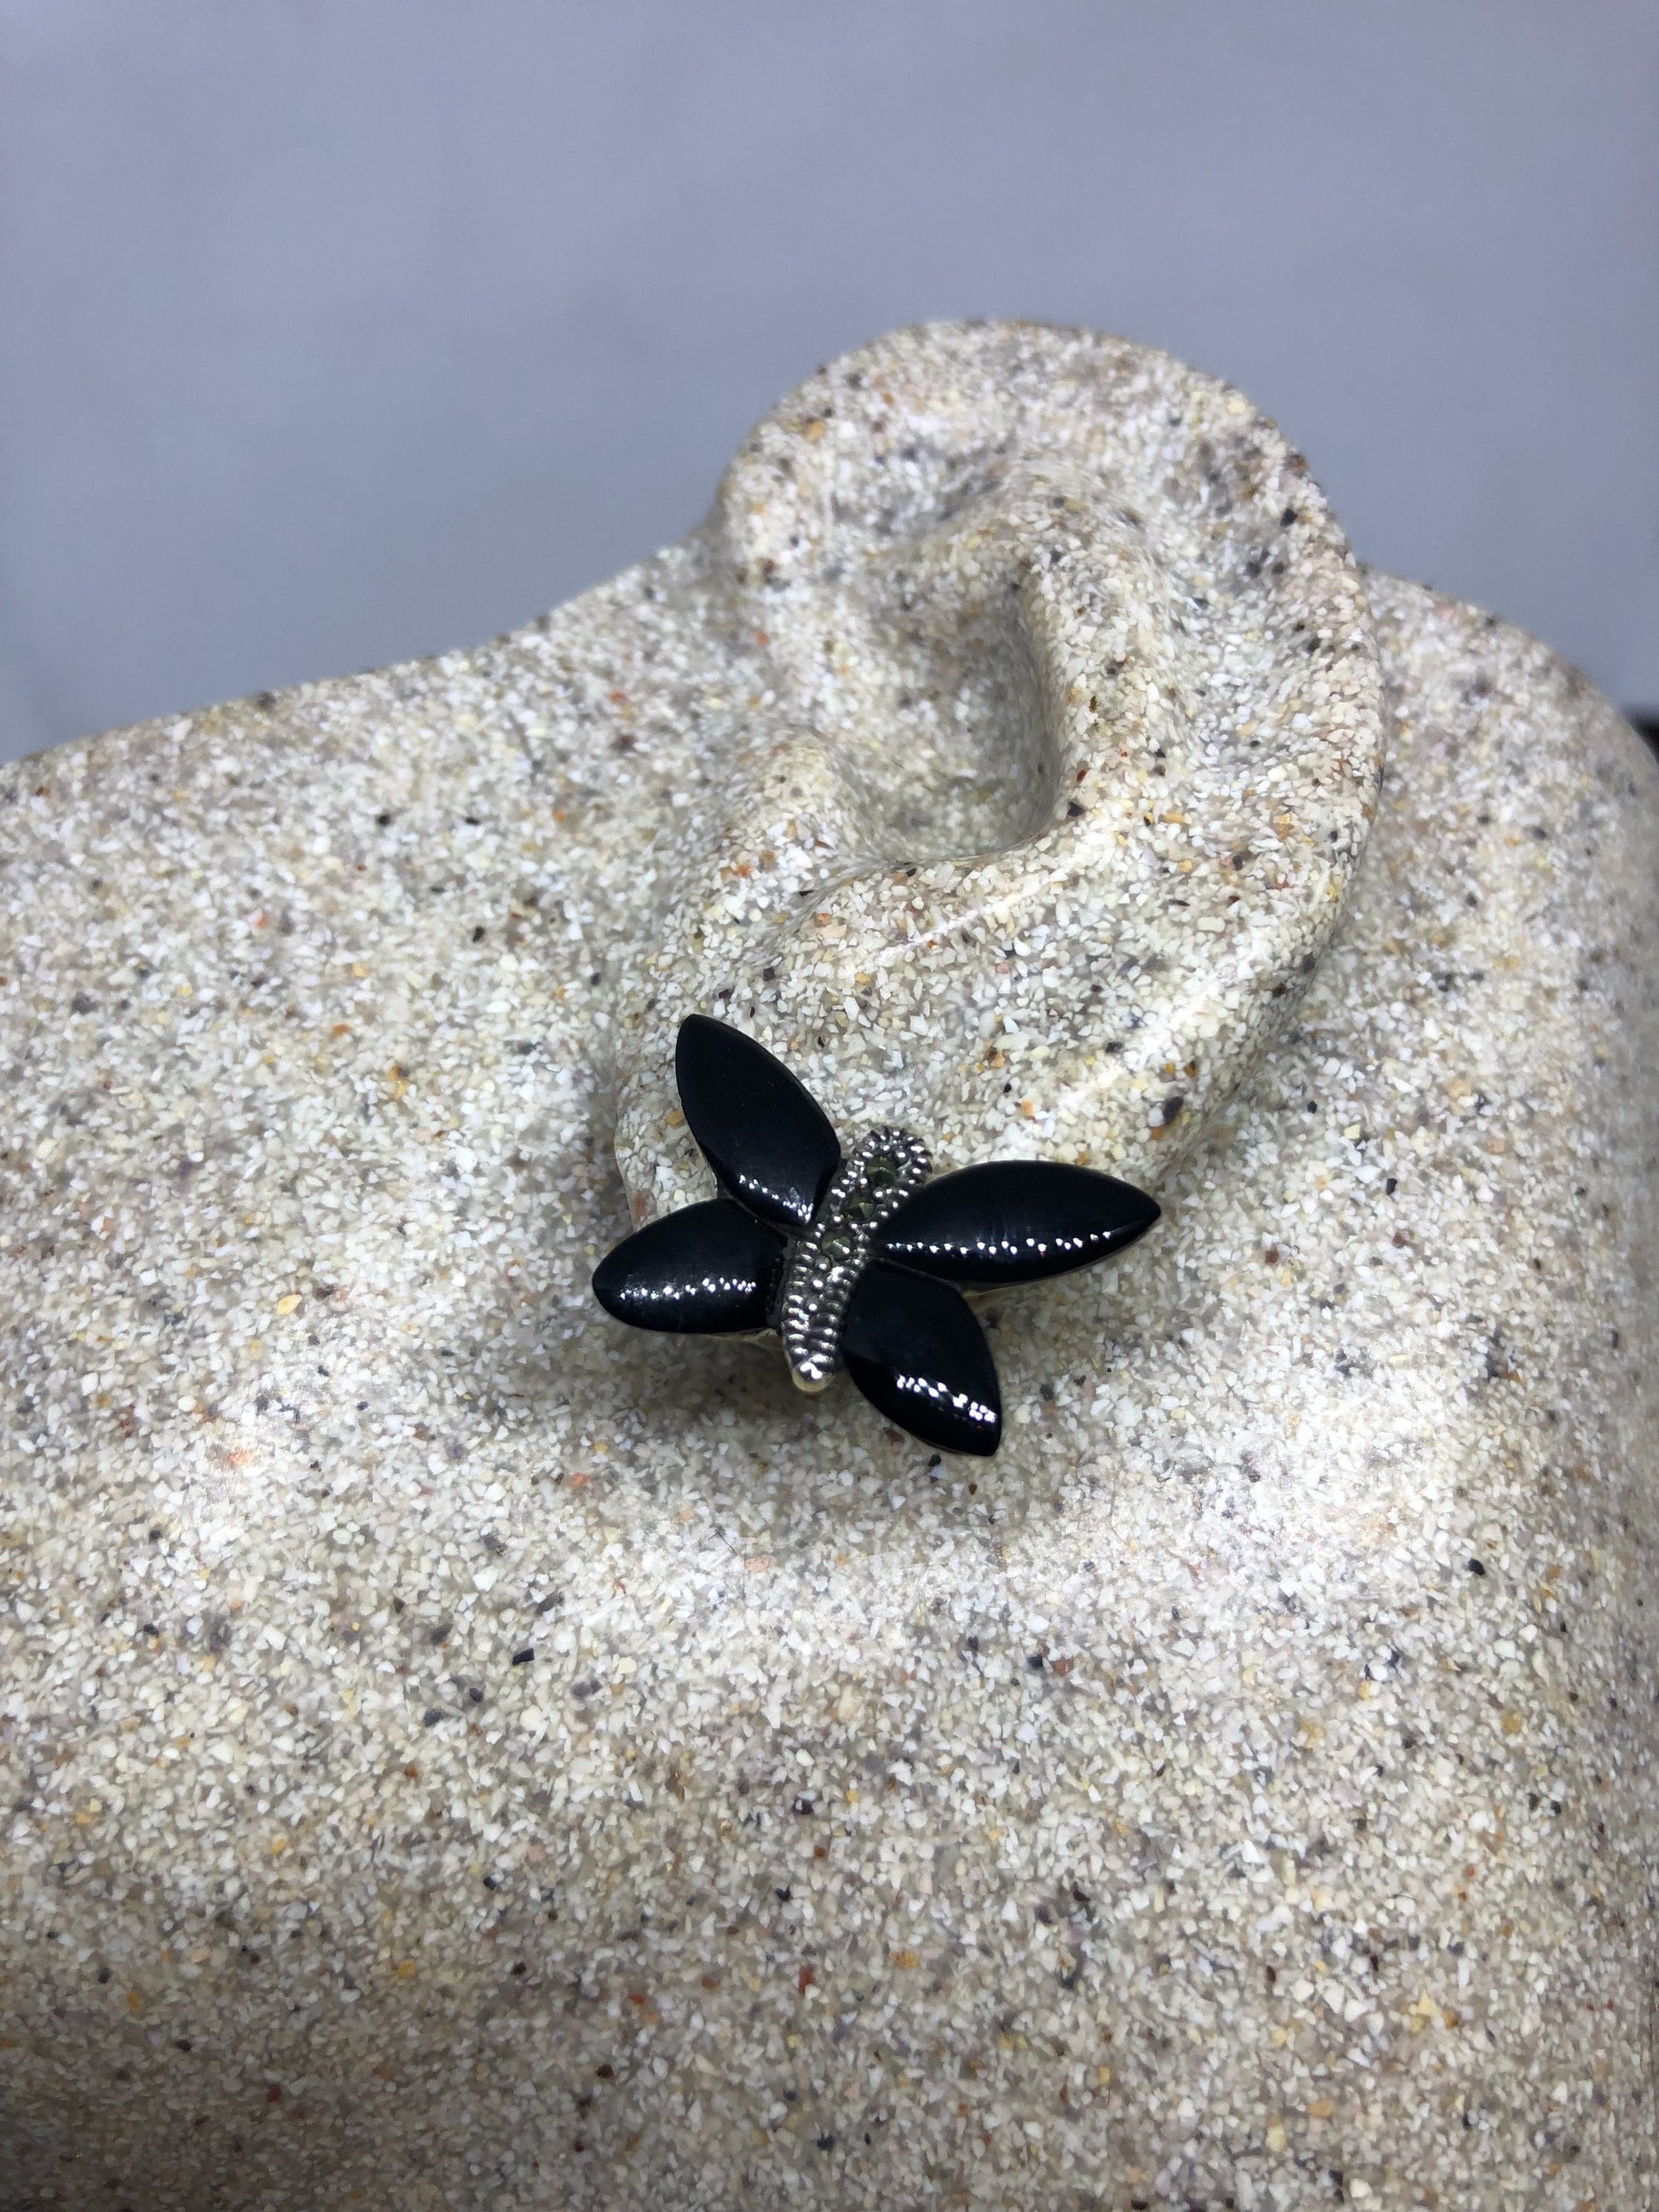 Vintage Black Onyx Dragonfly Earrings Marcasite 925 Sterling Silver Studs